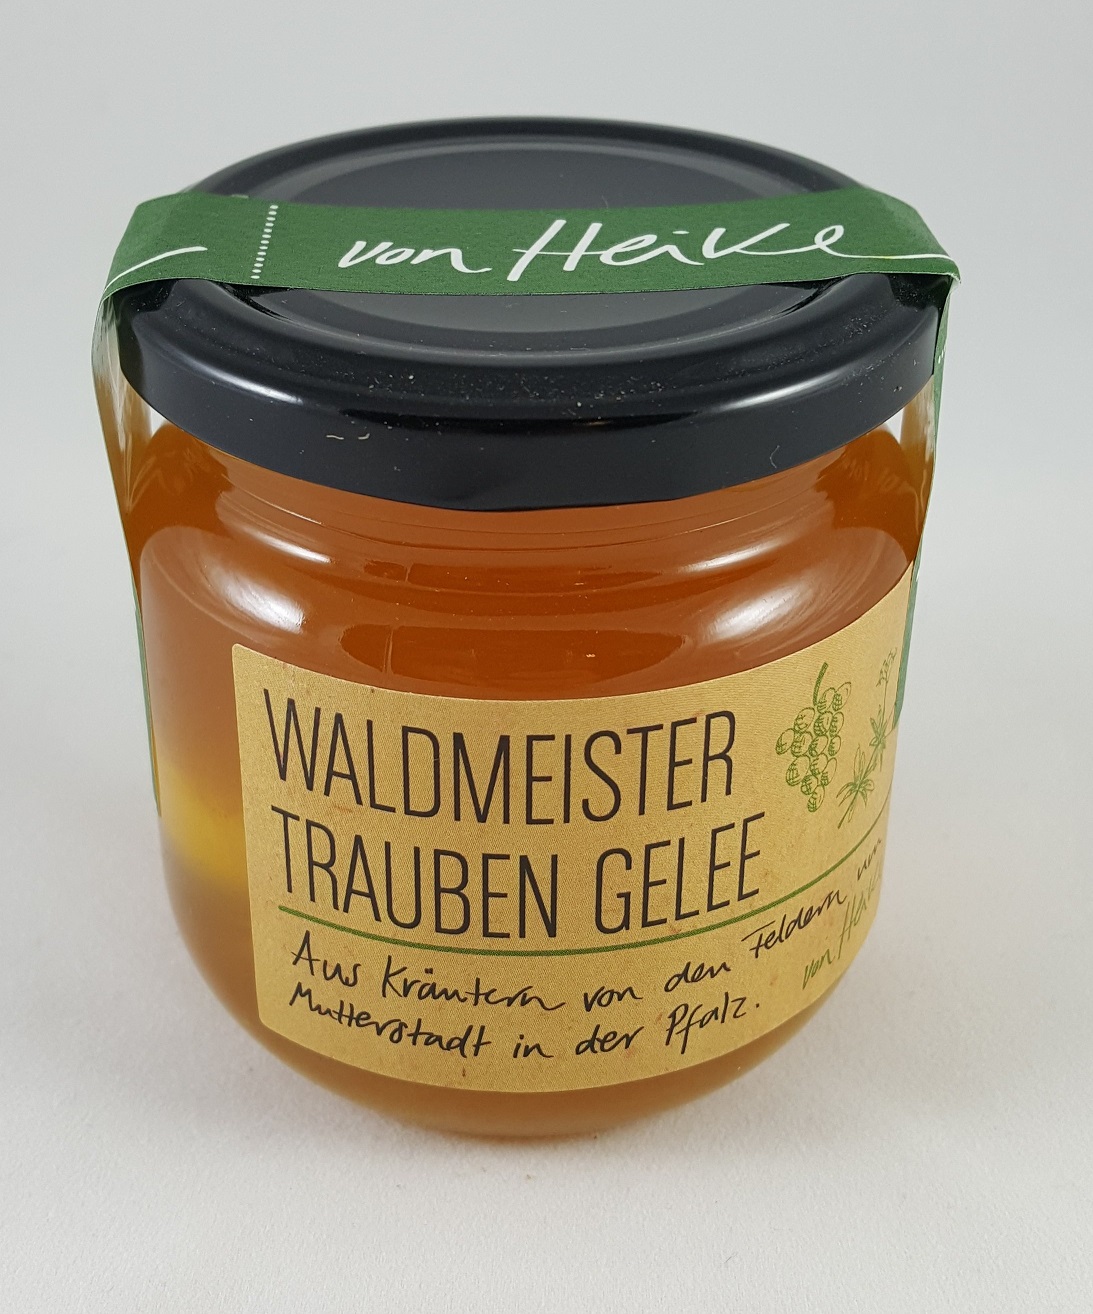 Waldmeister Trauben Gelee – Die Genussfaktur